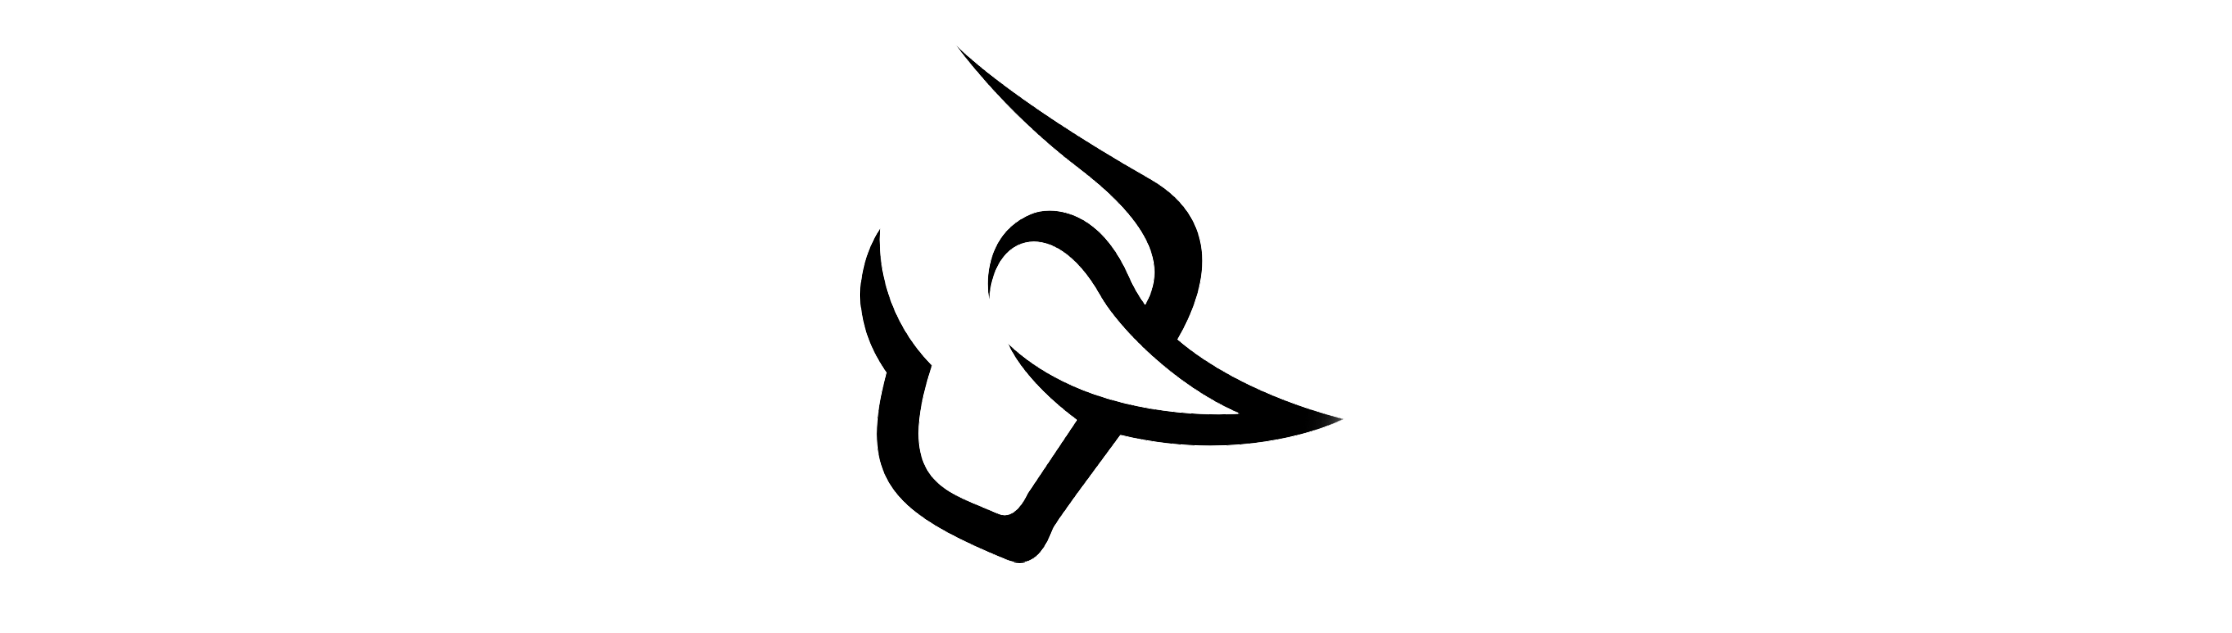 taurus firearms logo